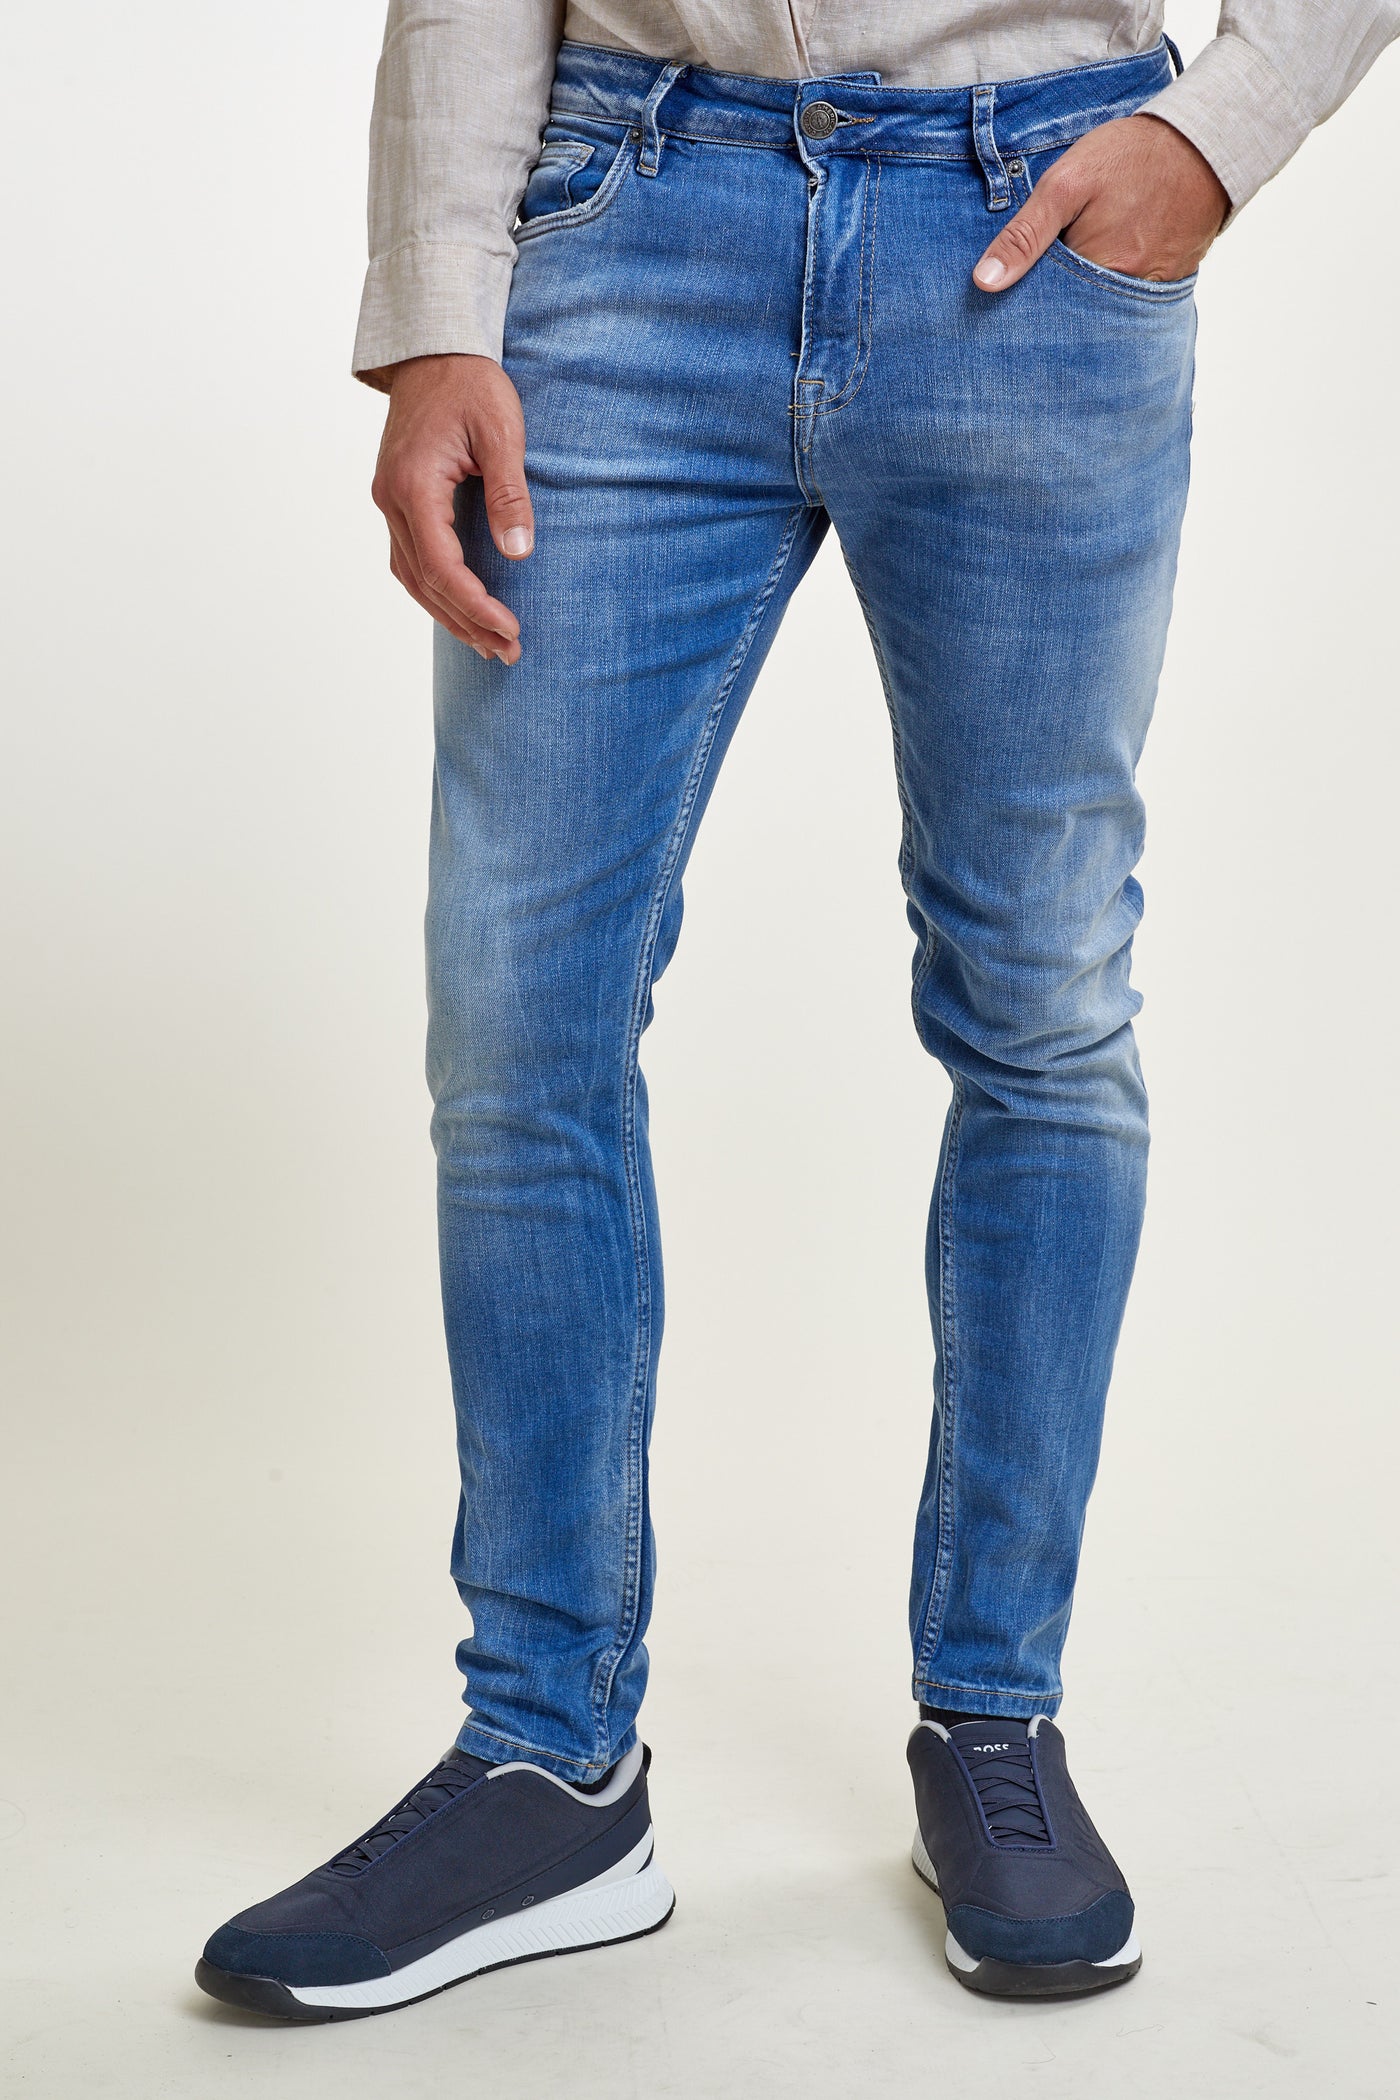 מכנס ג'ינס סלים 896 בצבע כחול 2